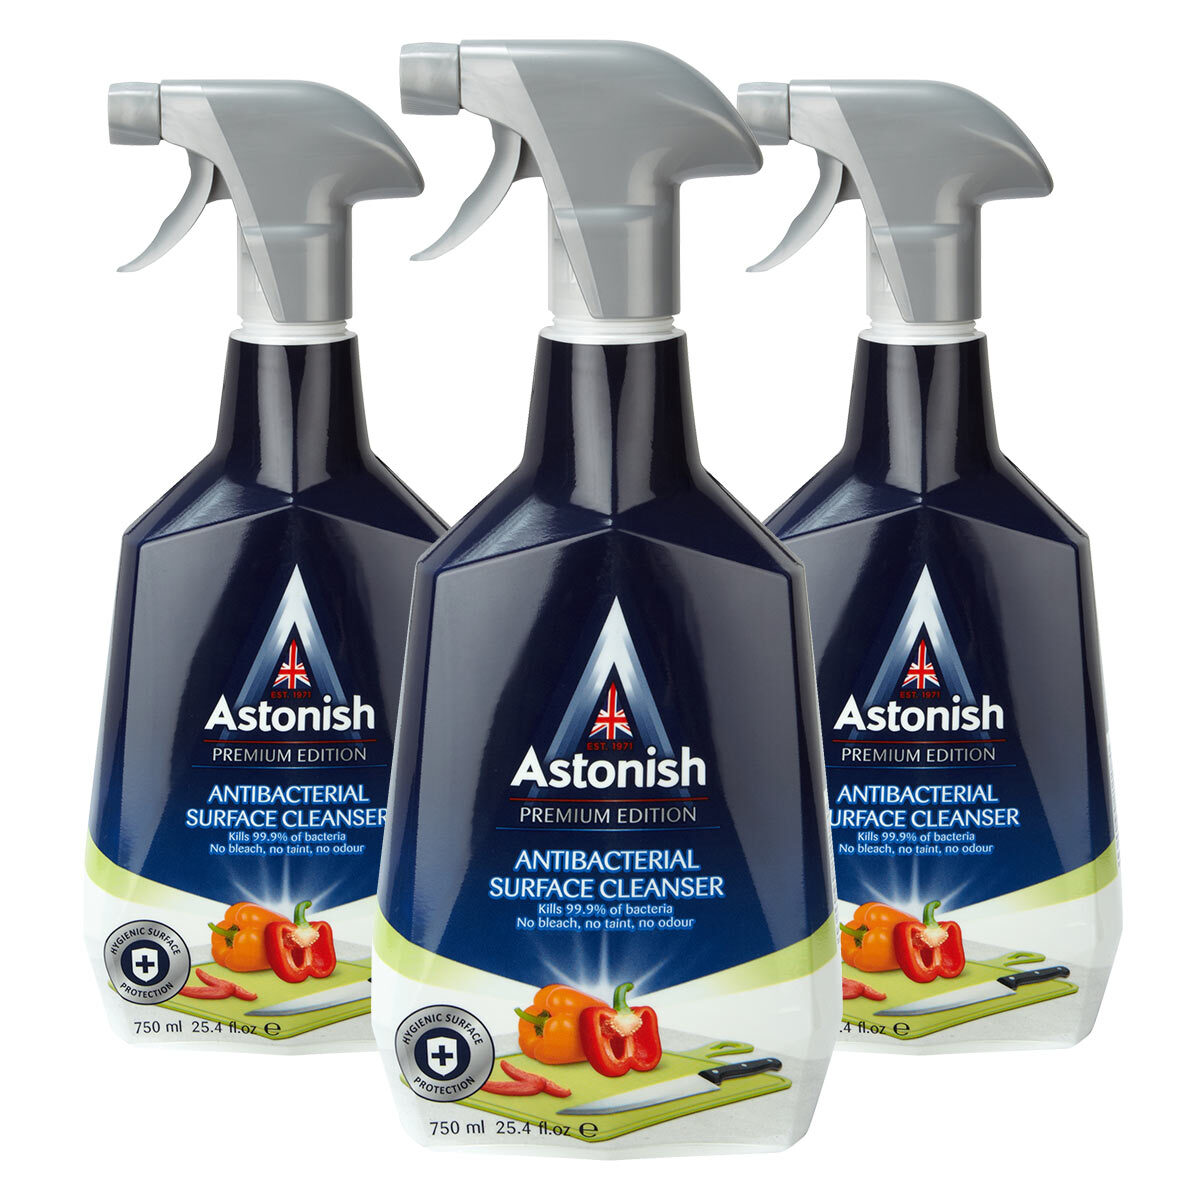 3 bottles of Astonish Premium Antibac 3 x750ml